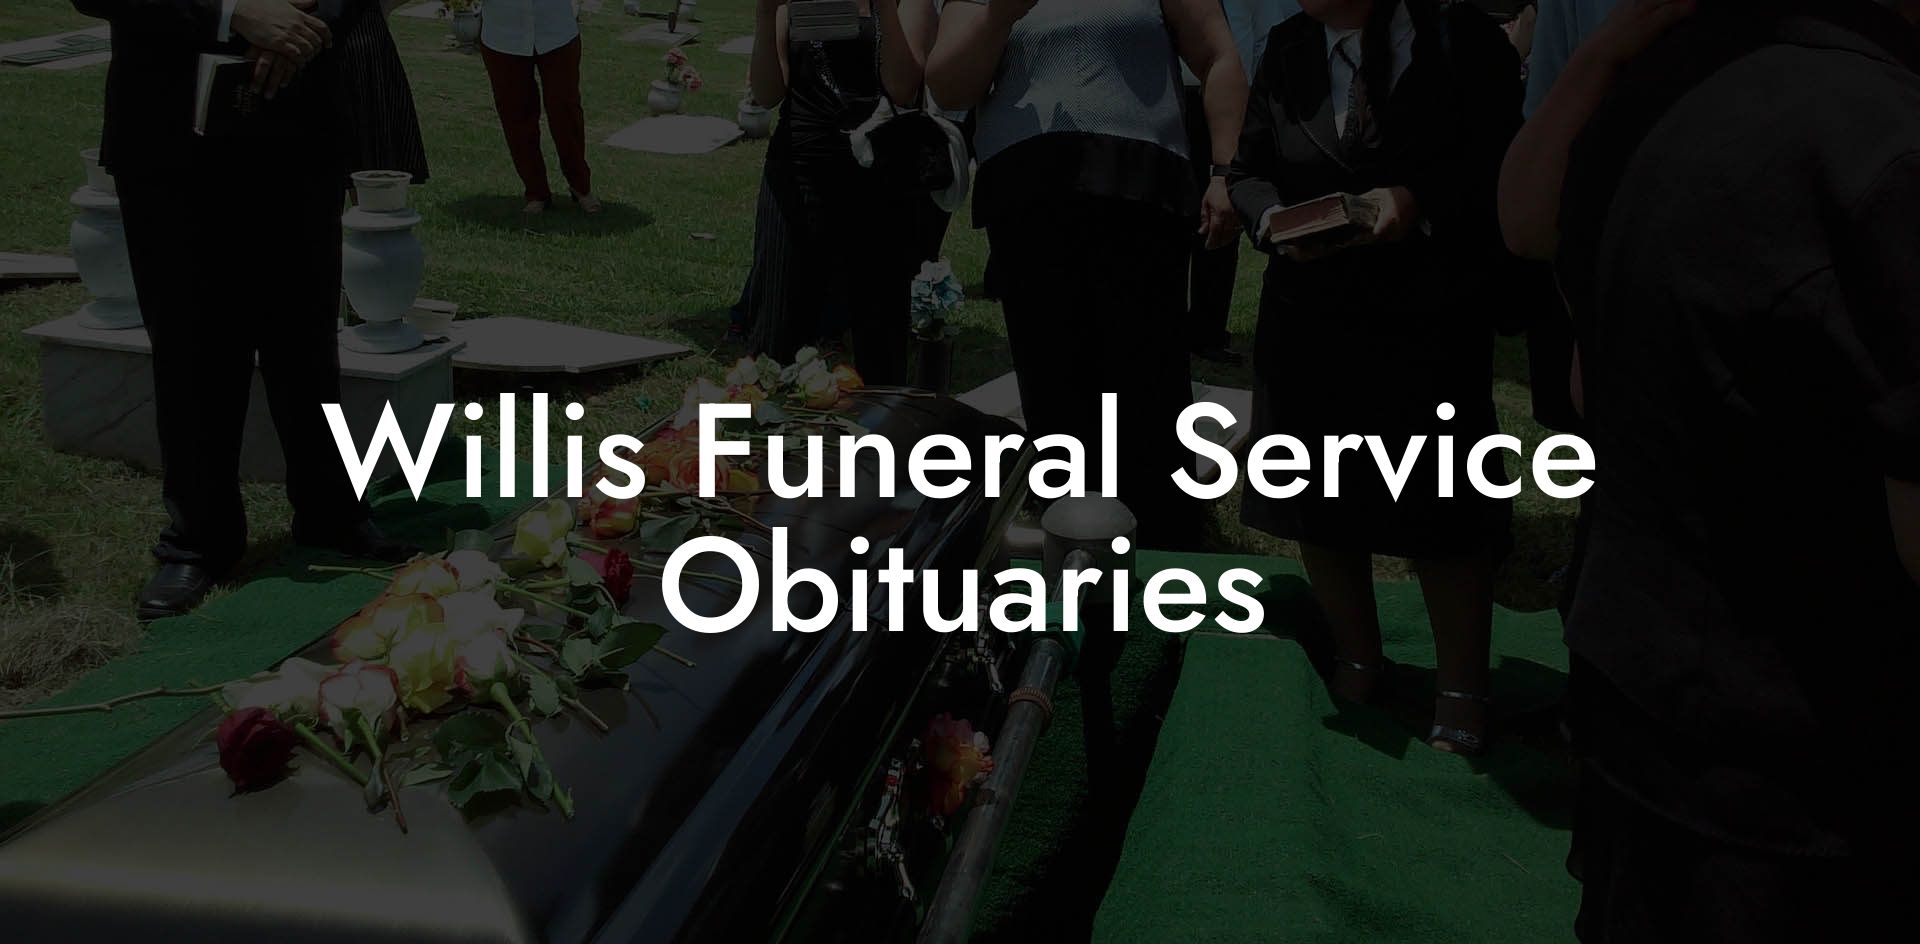 Willis Funeral Service Obituaries